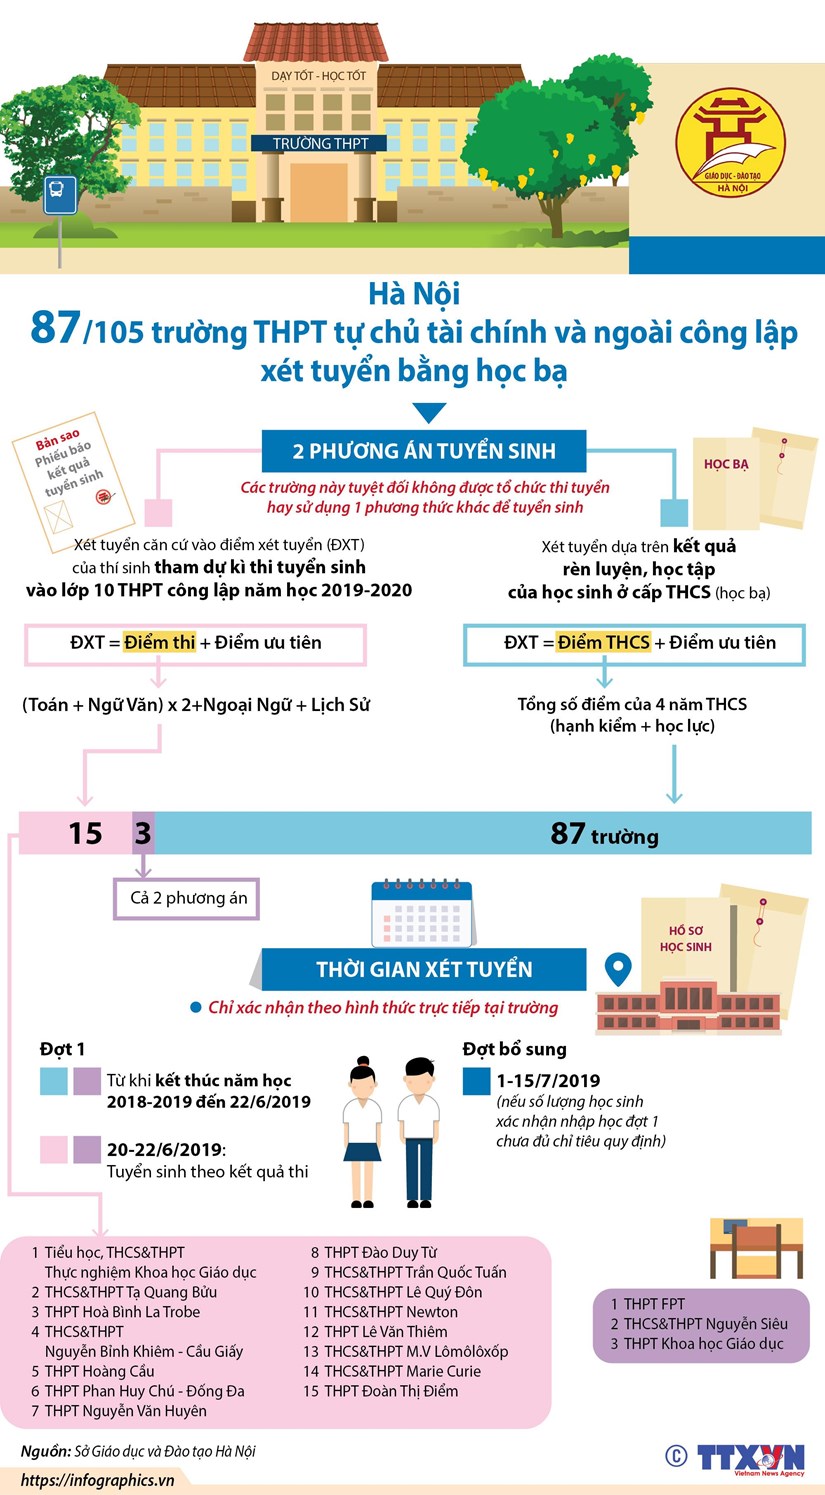 infographics ha noi 87 truong thpt ngoai cong lap xet tuyen bang hoc ba